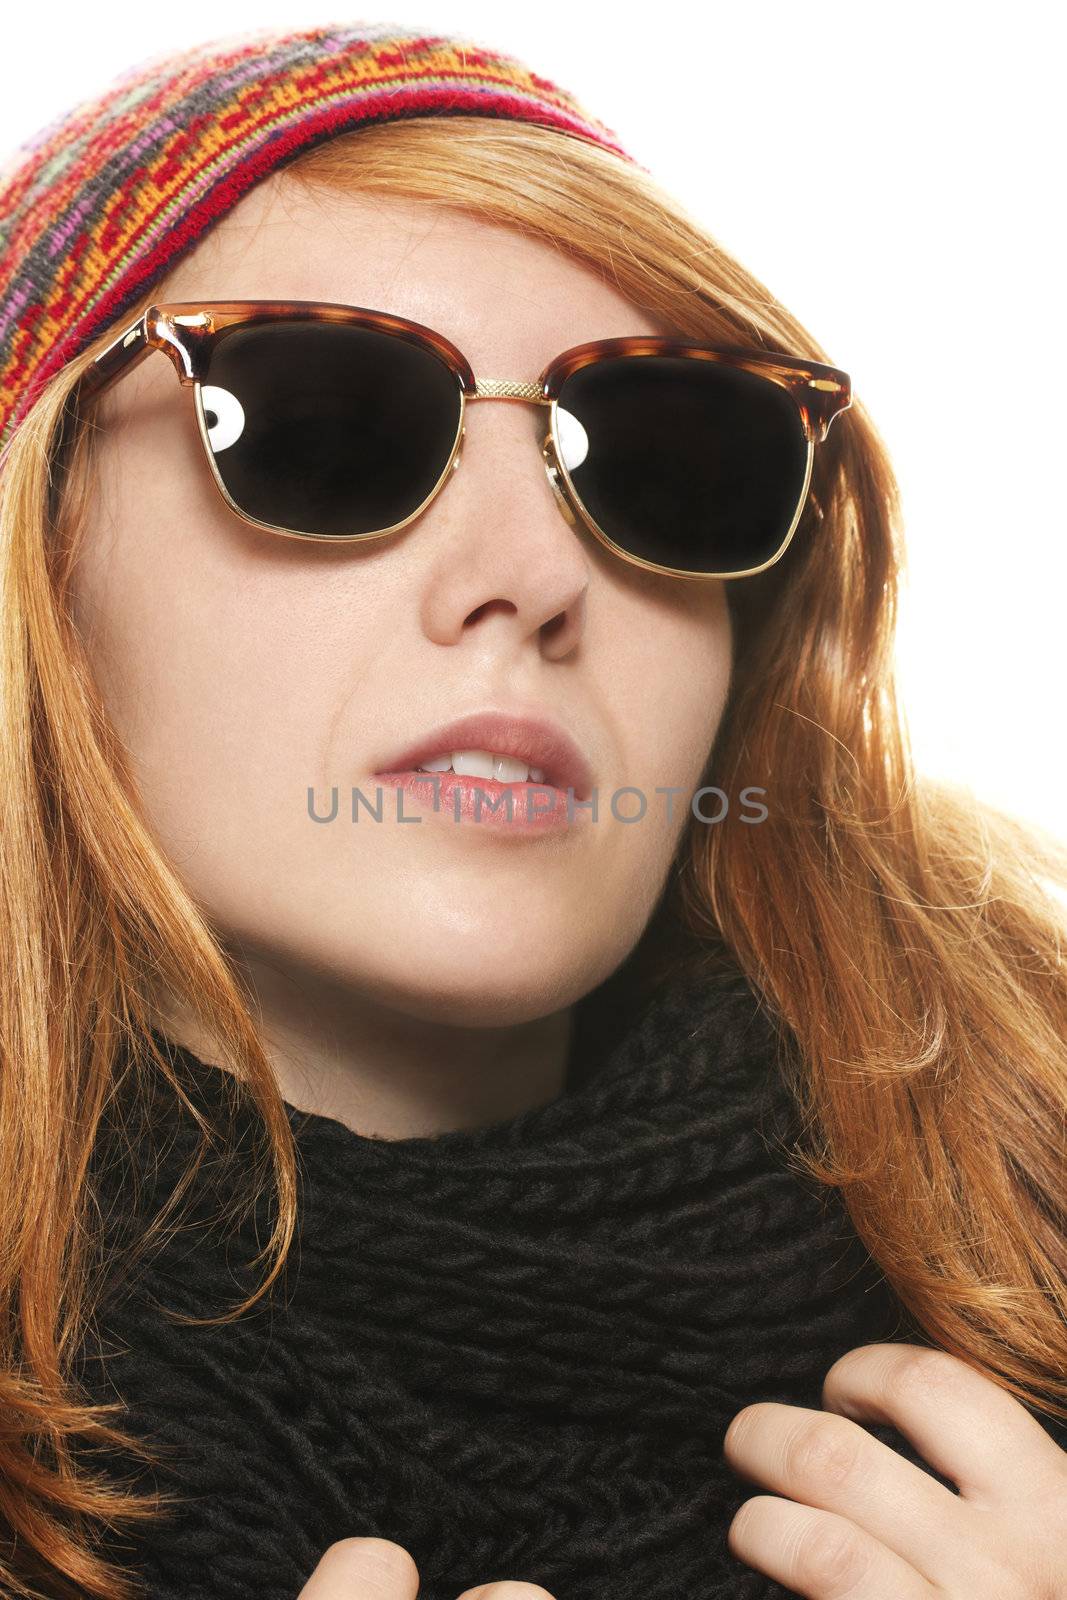 cool redhead woman wearing sunglasses in winter dress by RobStark